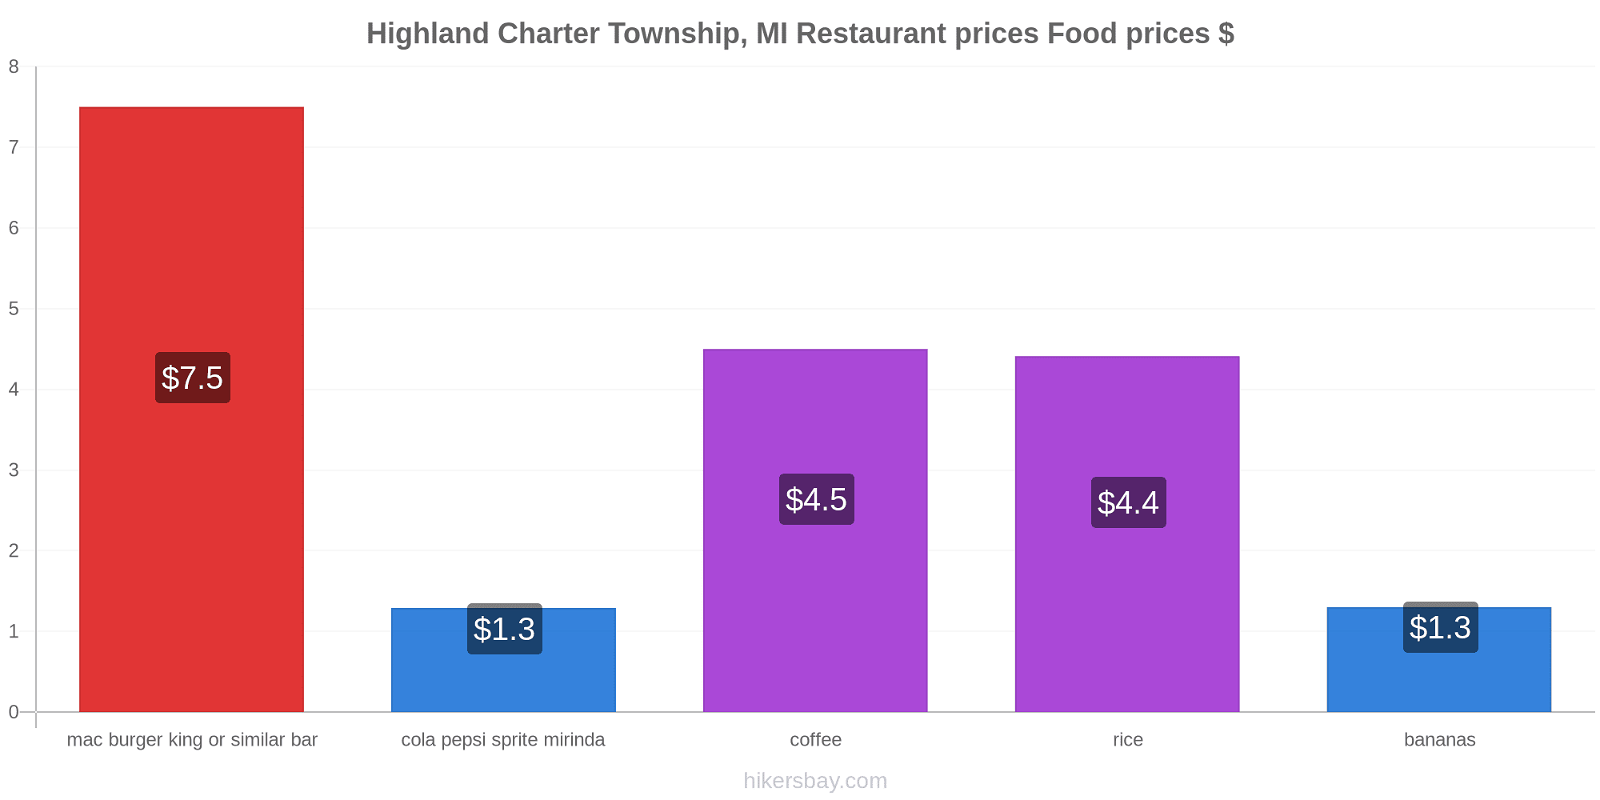 Highland Charter Township, MI price changes hikersbay.com